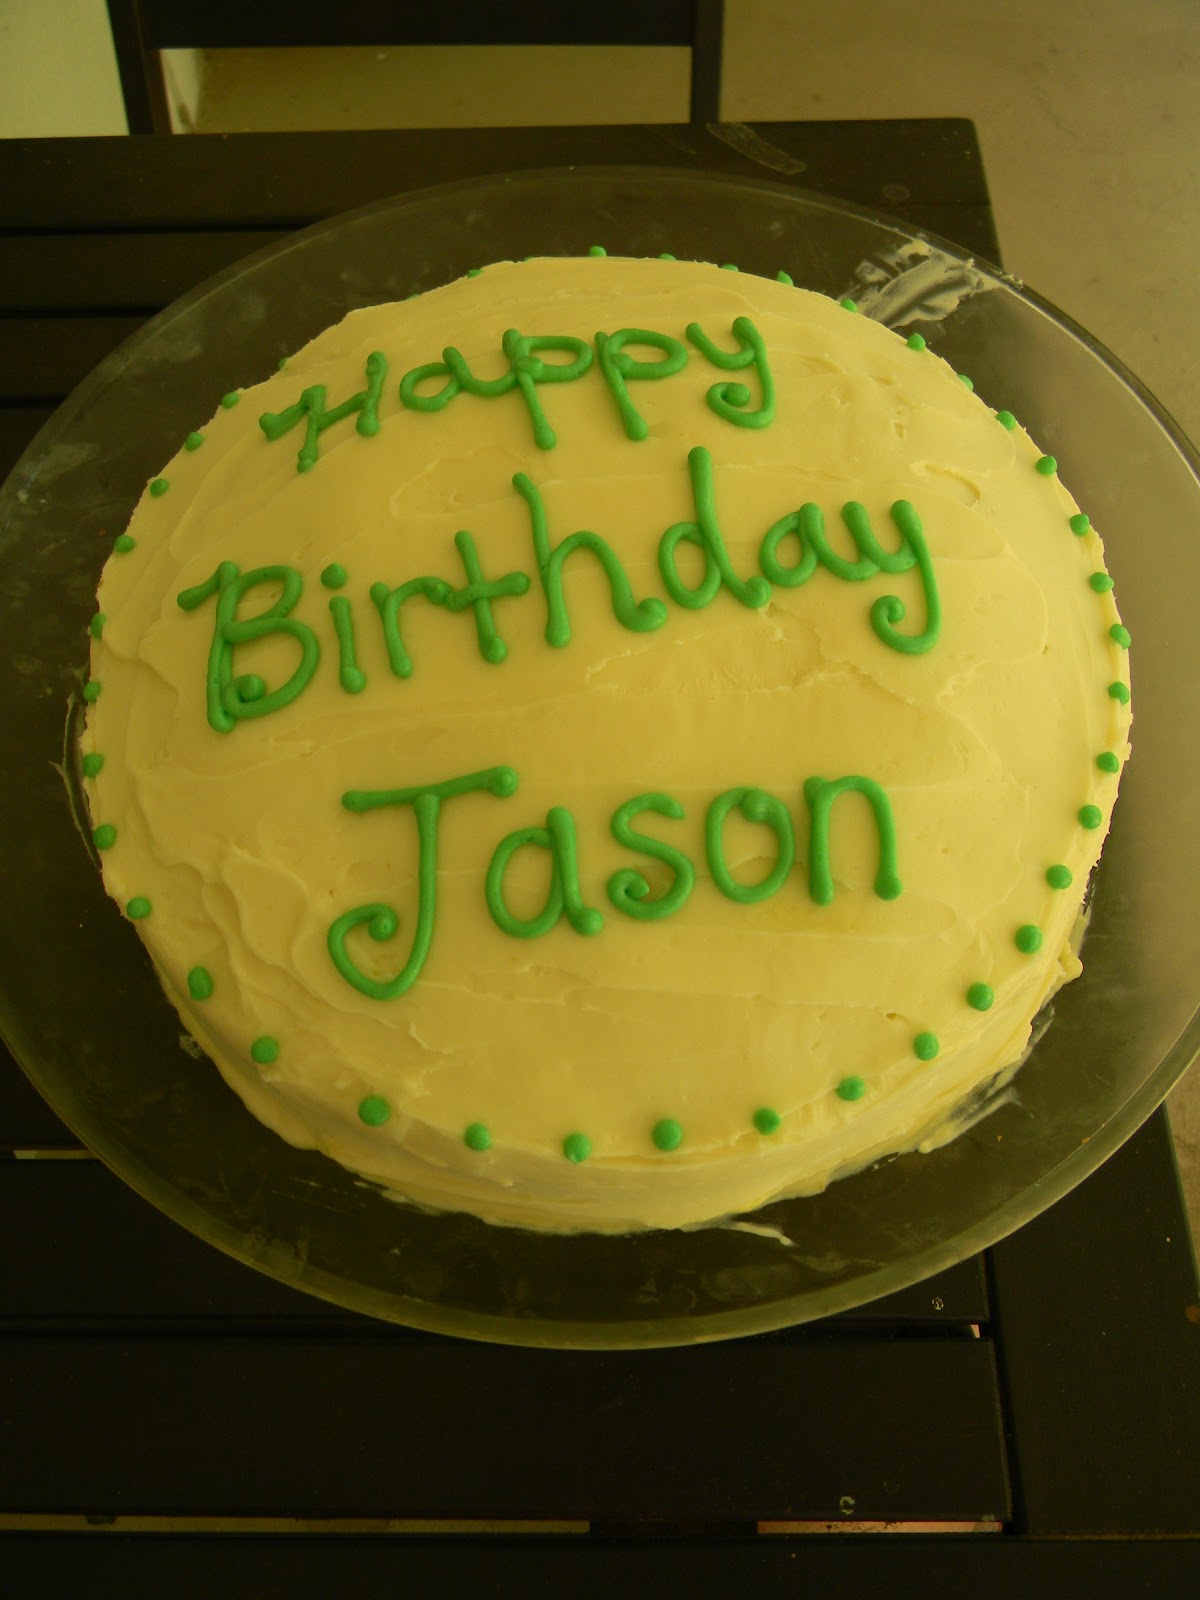 Happy Birthday Jason! Cake 🎂 - Greetings Cards for Birthday for Jason -  messageswishesgreetings.com